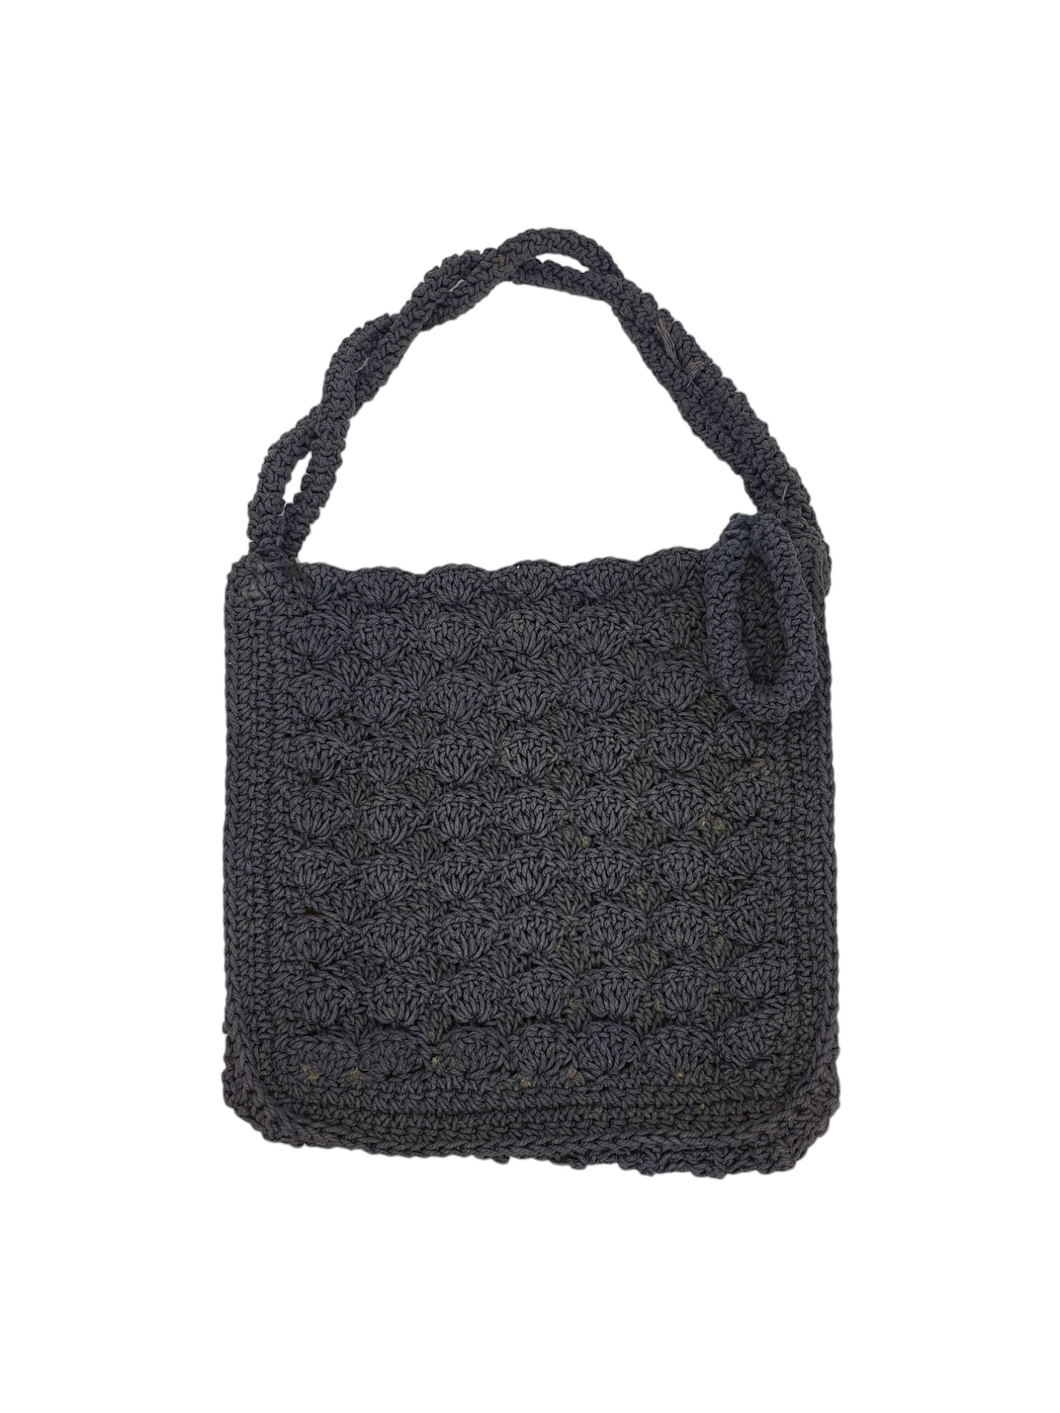 1940s Square Navy/Grey Crochet Handbag With Matching Zipper Pull